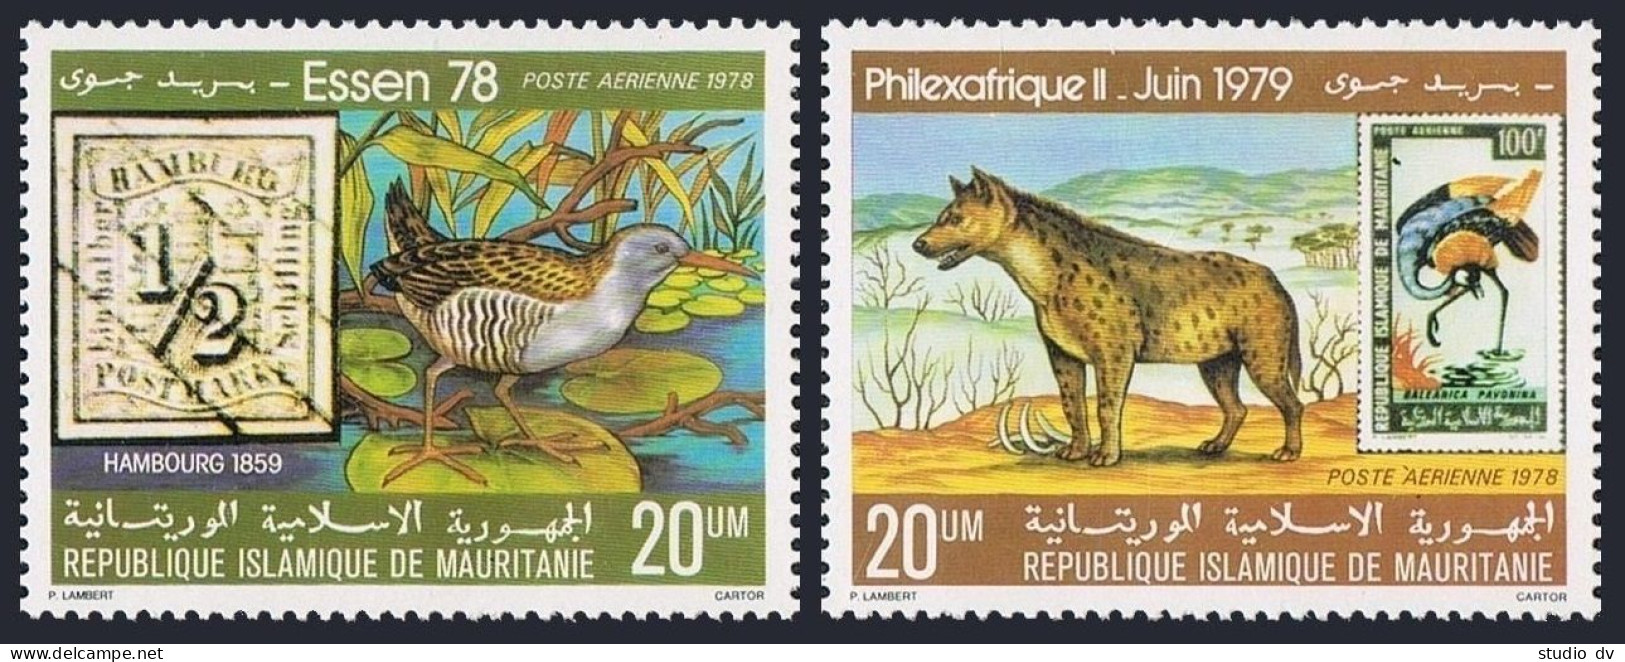 Mauritania C185-C186, MNH. Michel 613-614. ESSEN-1978. Hyena, Wading Bird. - Mauritania (1960-...)